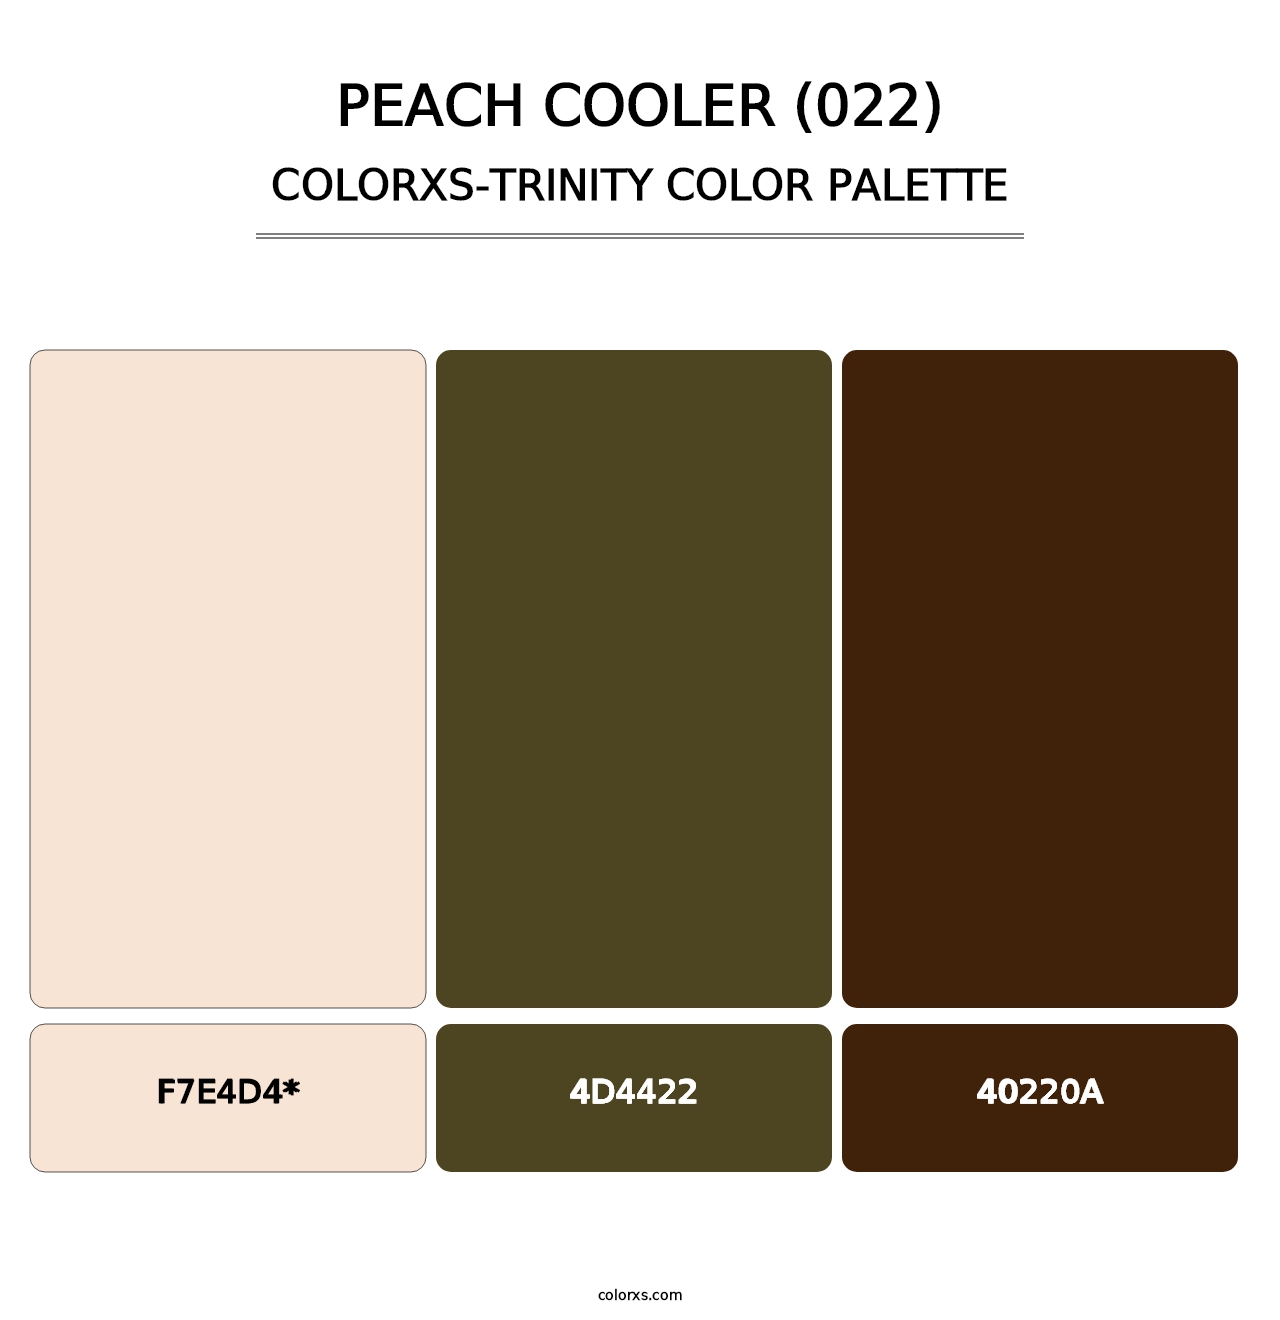 Peach Cooler (022) - Colorxs Trinity Palette